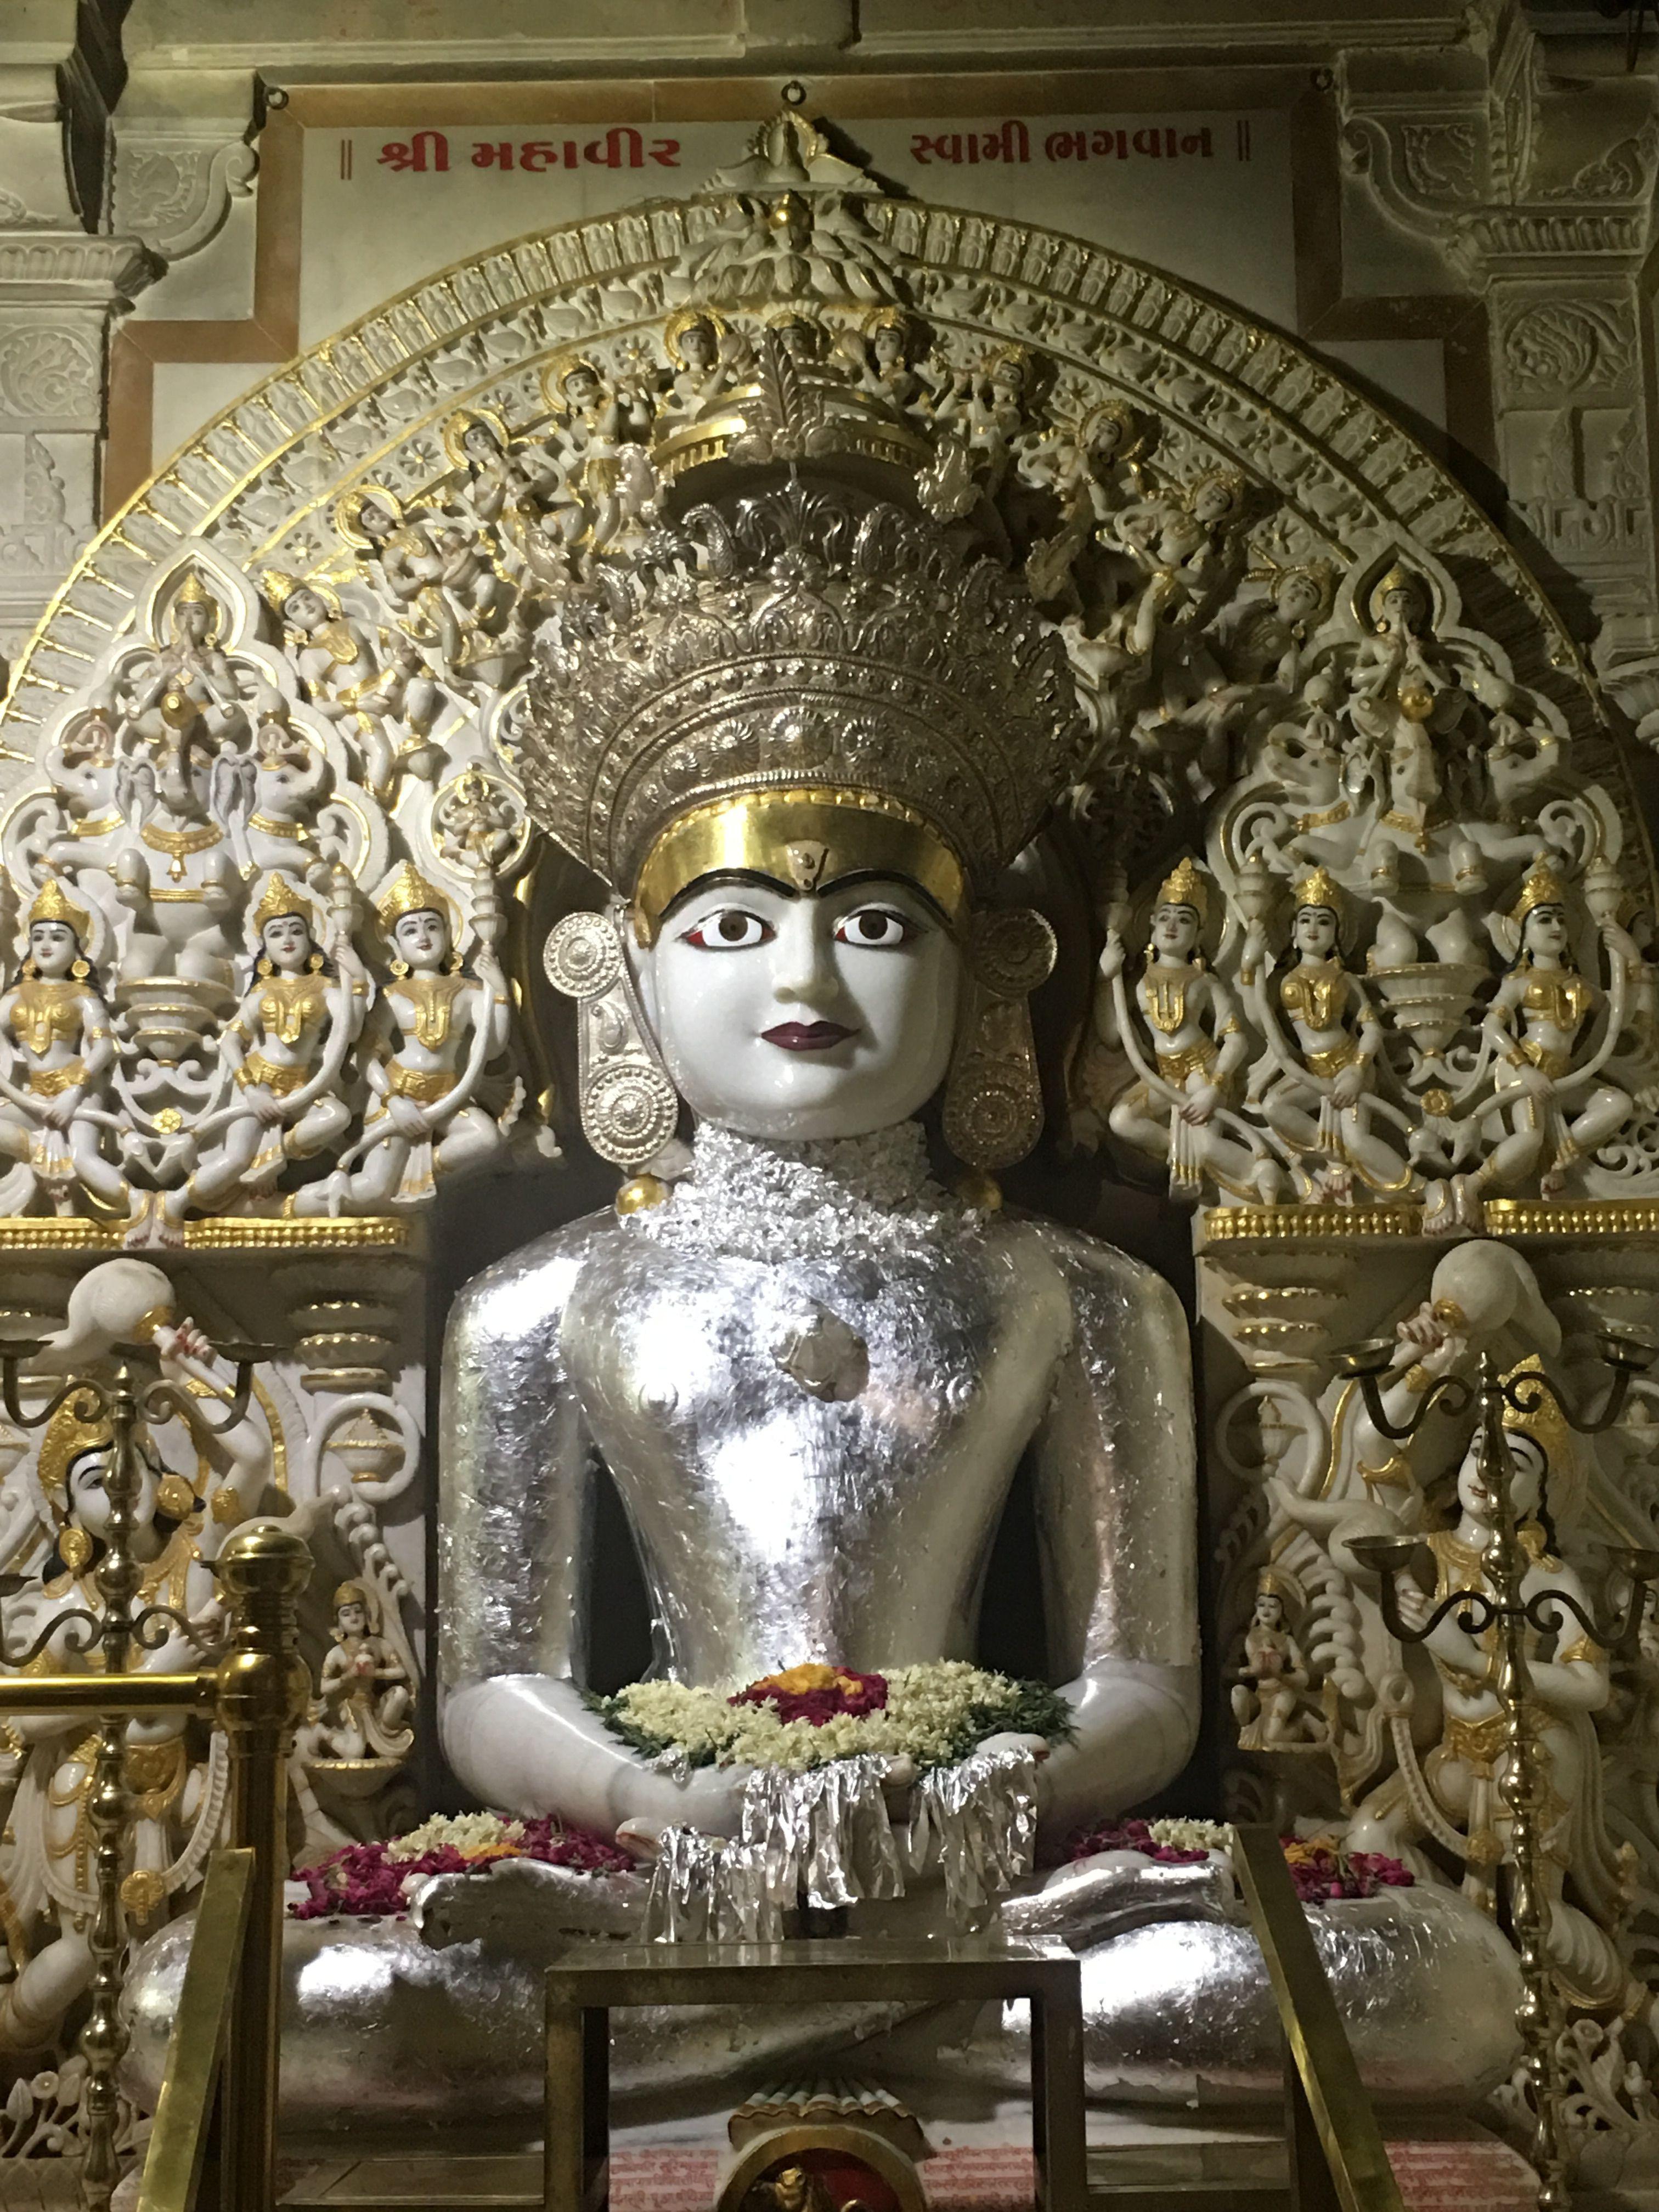 Jain god images and wallpaper Download